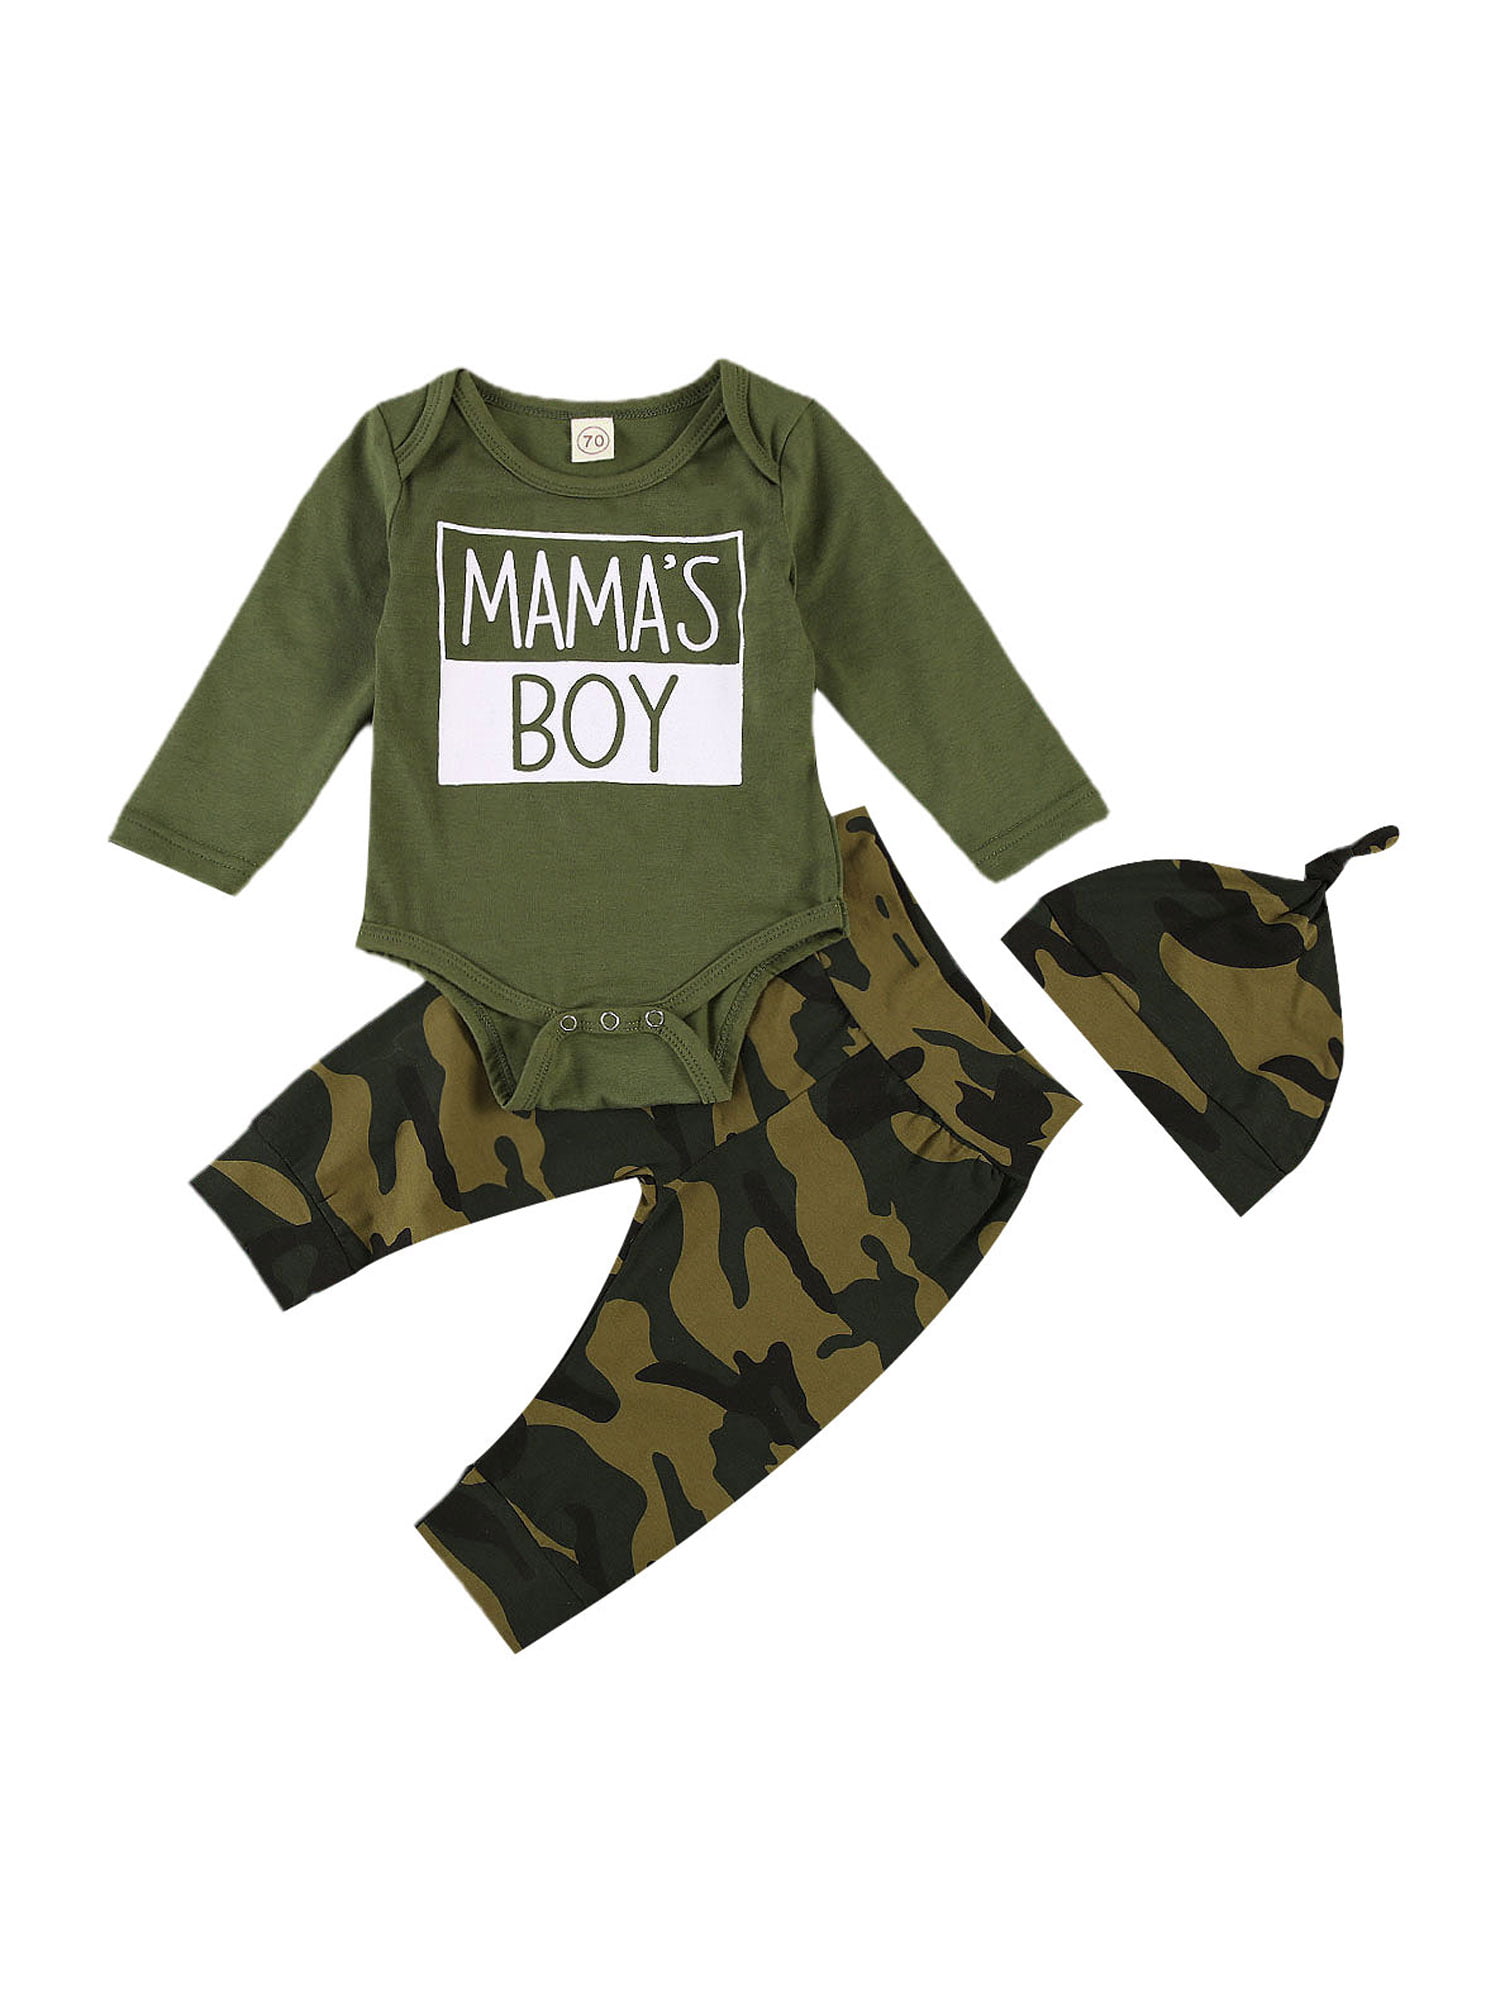 Ganz E8 Baby Boy Camouflage Camo Top & Pant Set Born in the USA 3-9m ER44940 